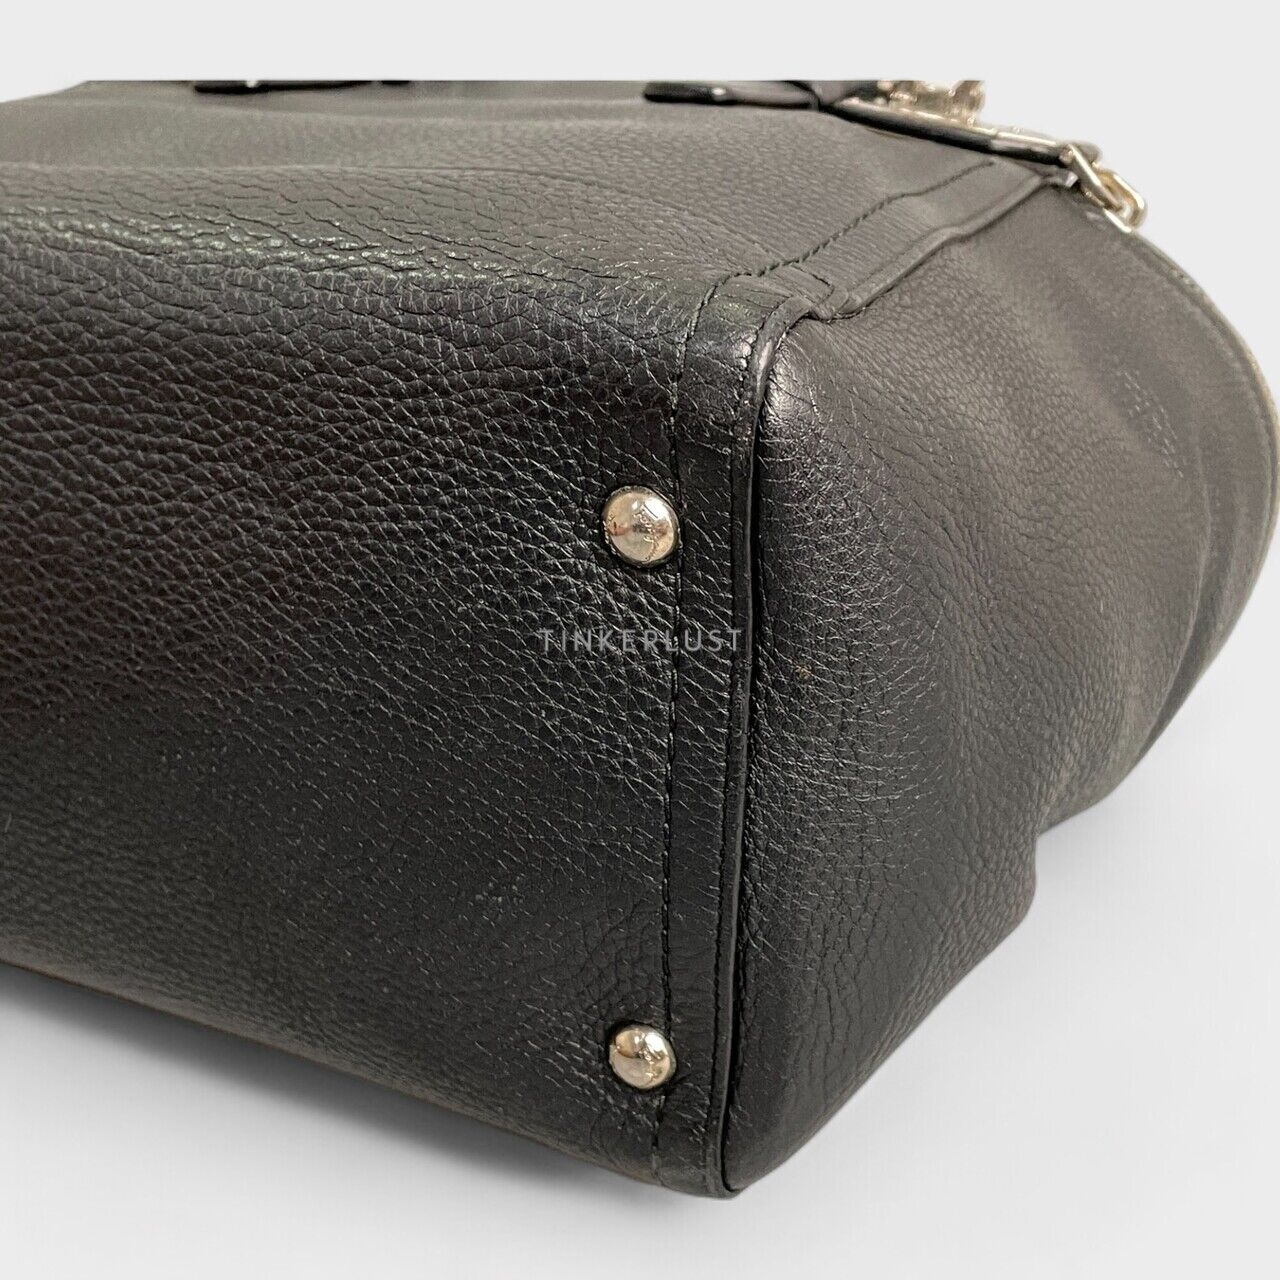 Salvatore Ferragamo Verve Black Leather Handbag